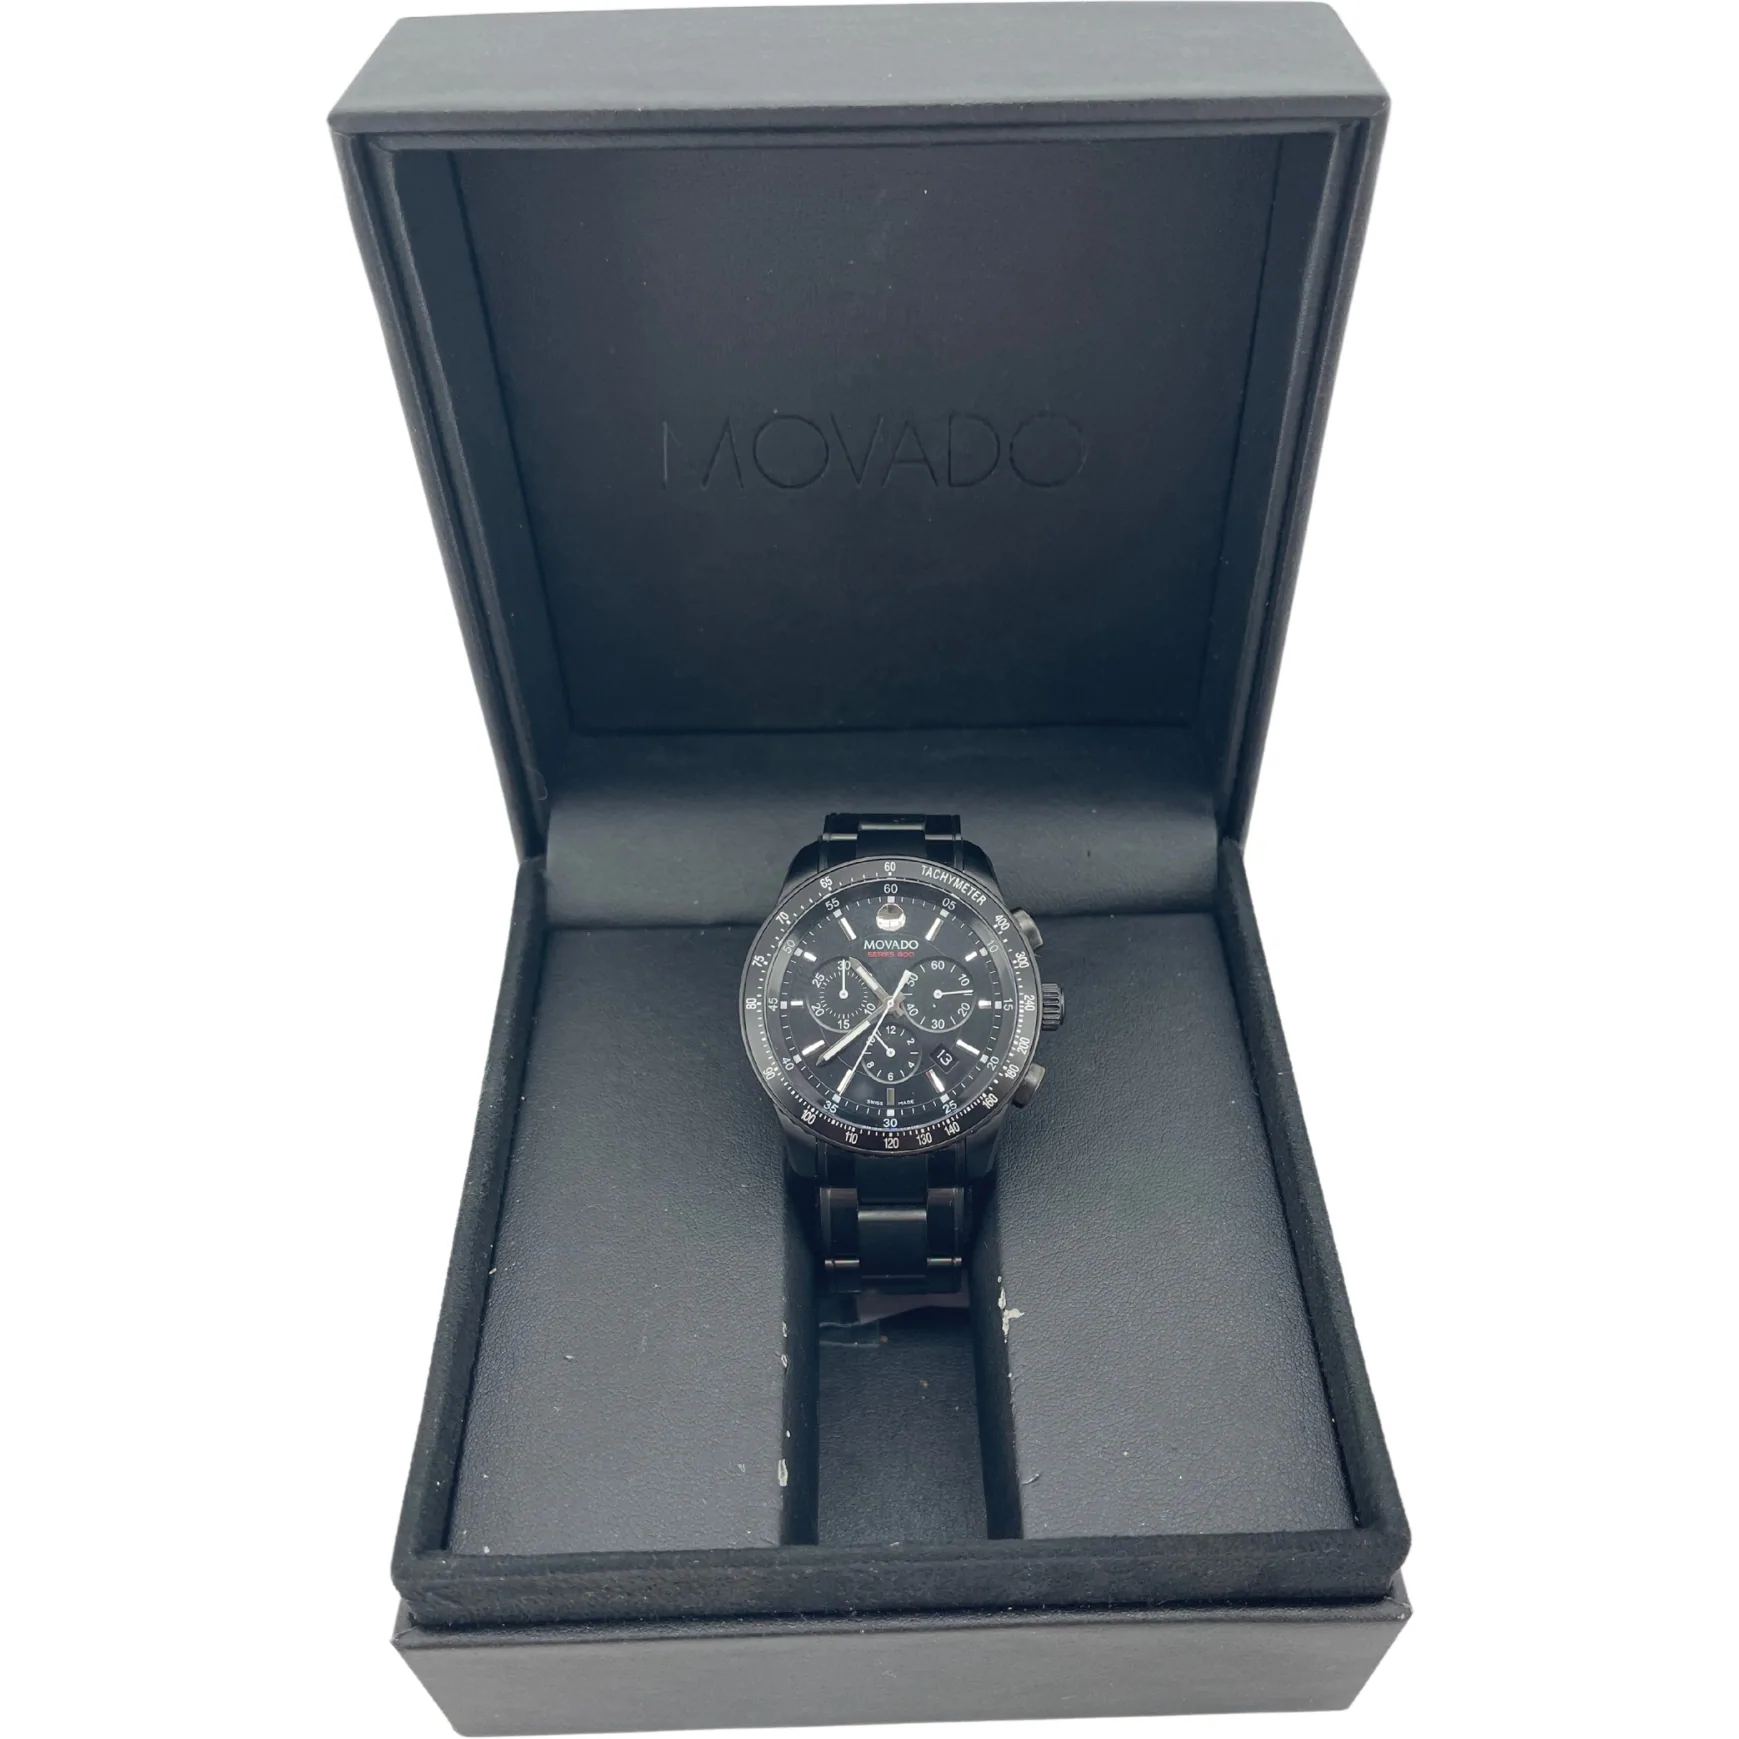 Movado Men's Wrist Watch / 2600107 Series 800 / Black / Chronograph Watch / Analog Display **DEALS**